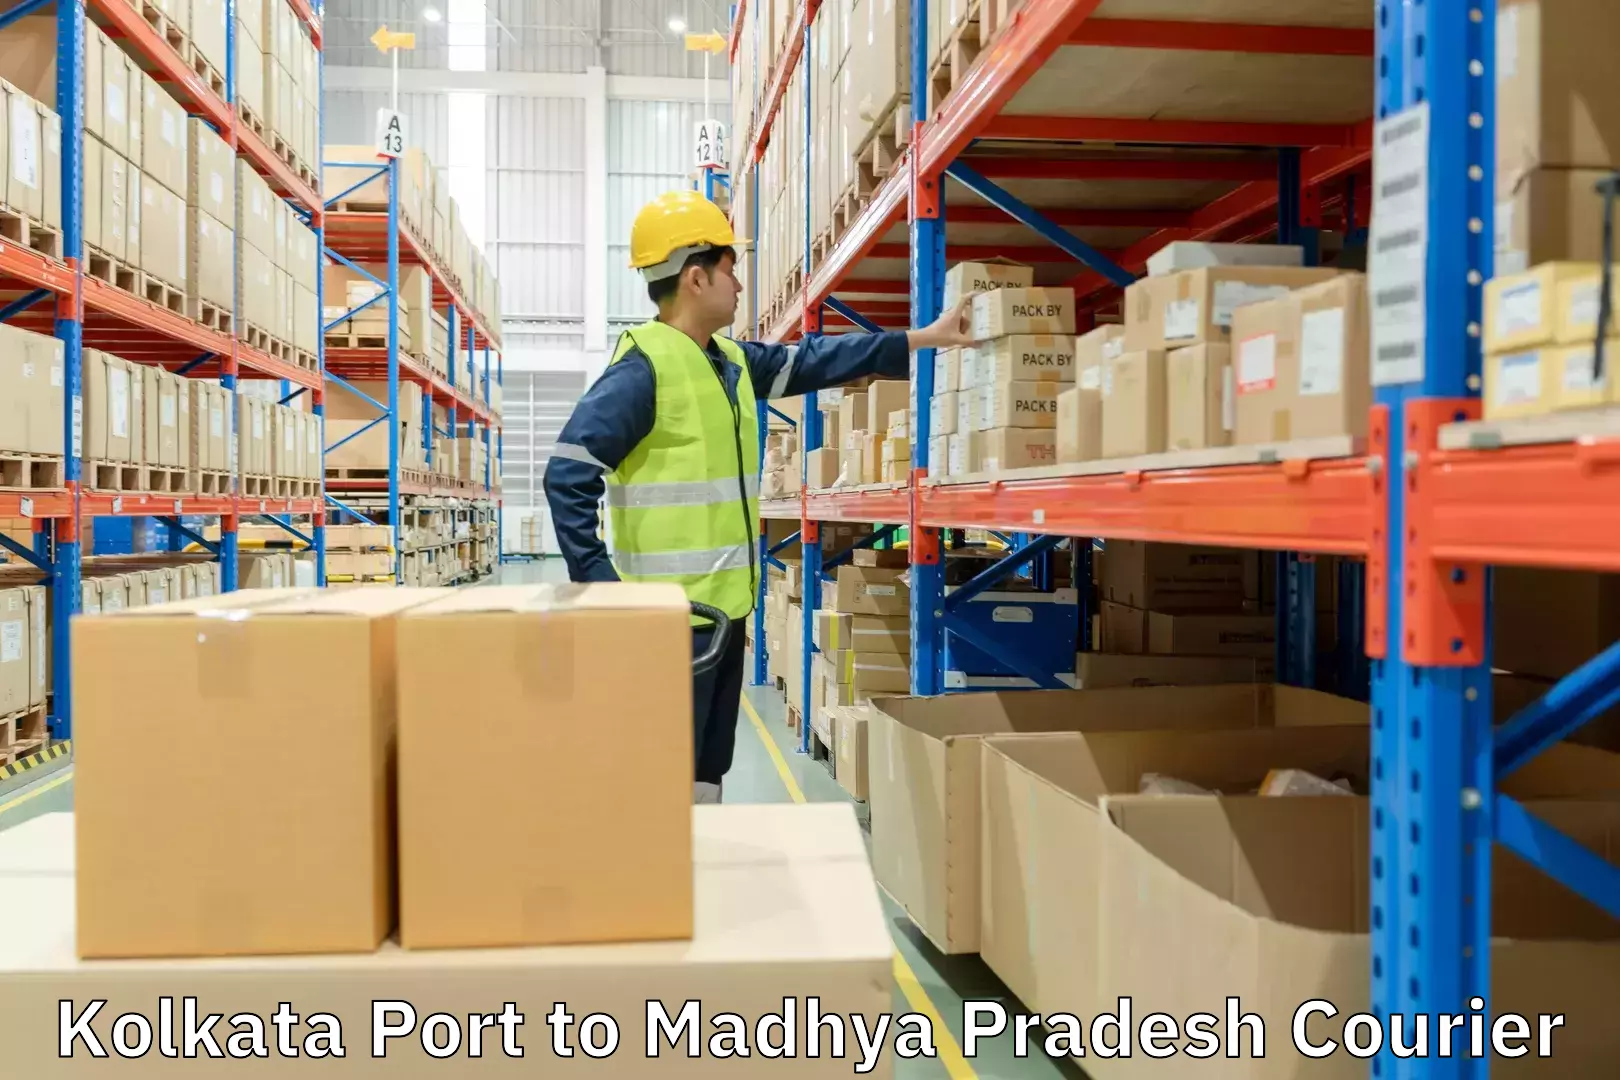 High-performance logistics Kolkata Port to Madhya Pradesh